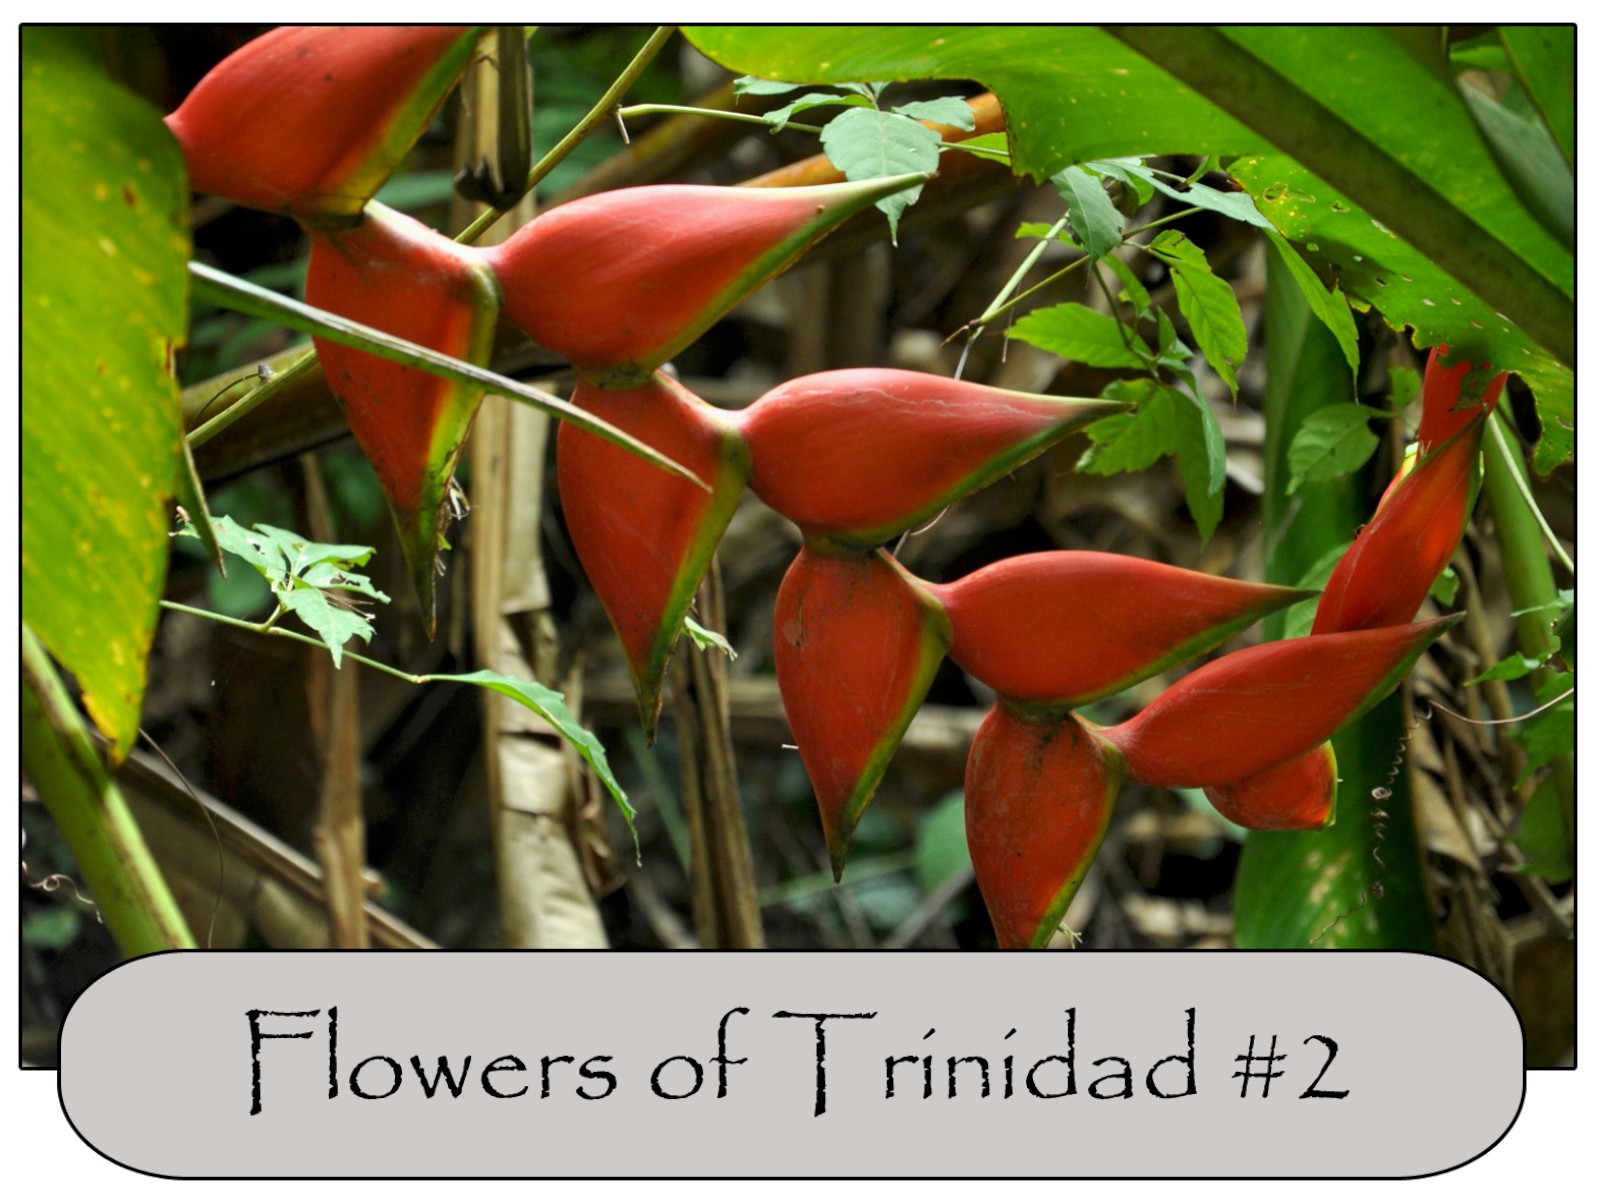 Flowers And Plants Trinidad Tobago